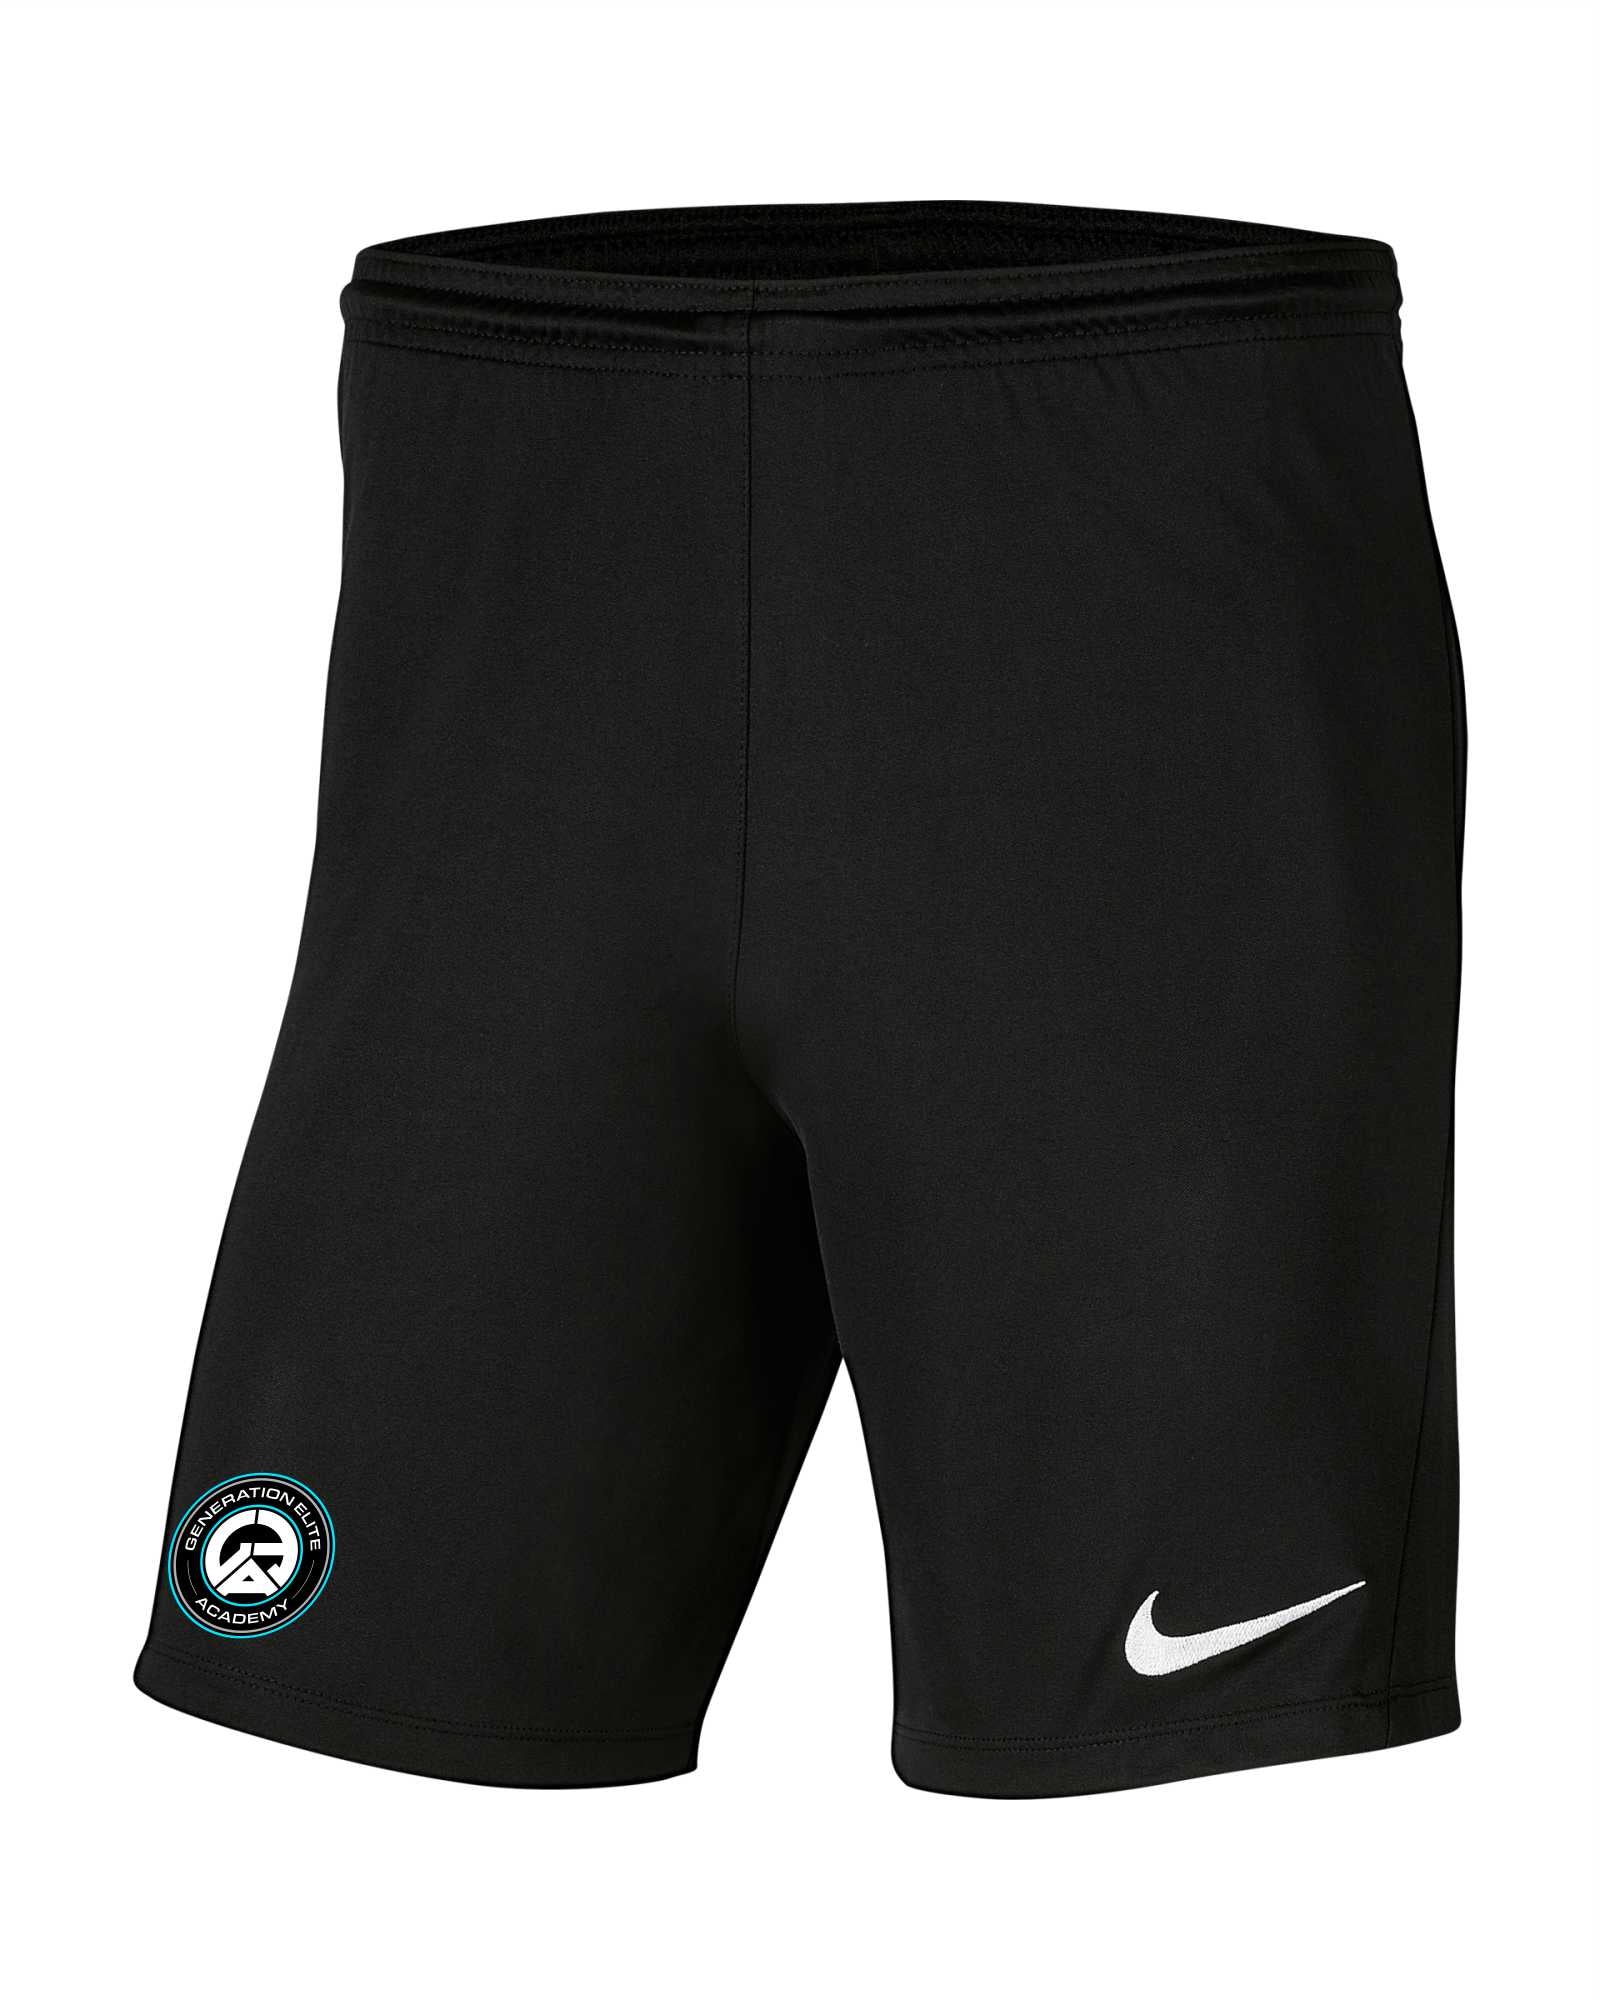 GEA - Nike Park 20 Knit Short - Black